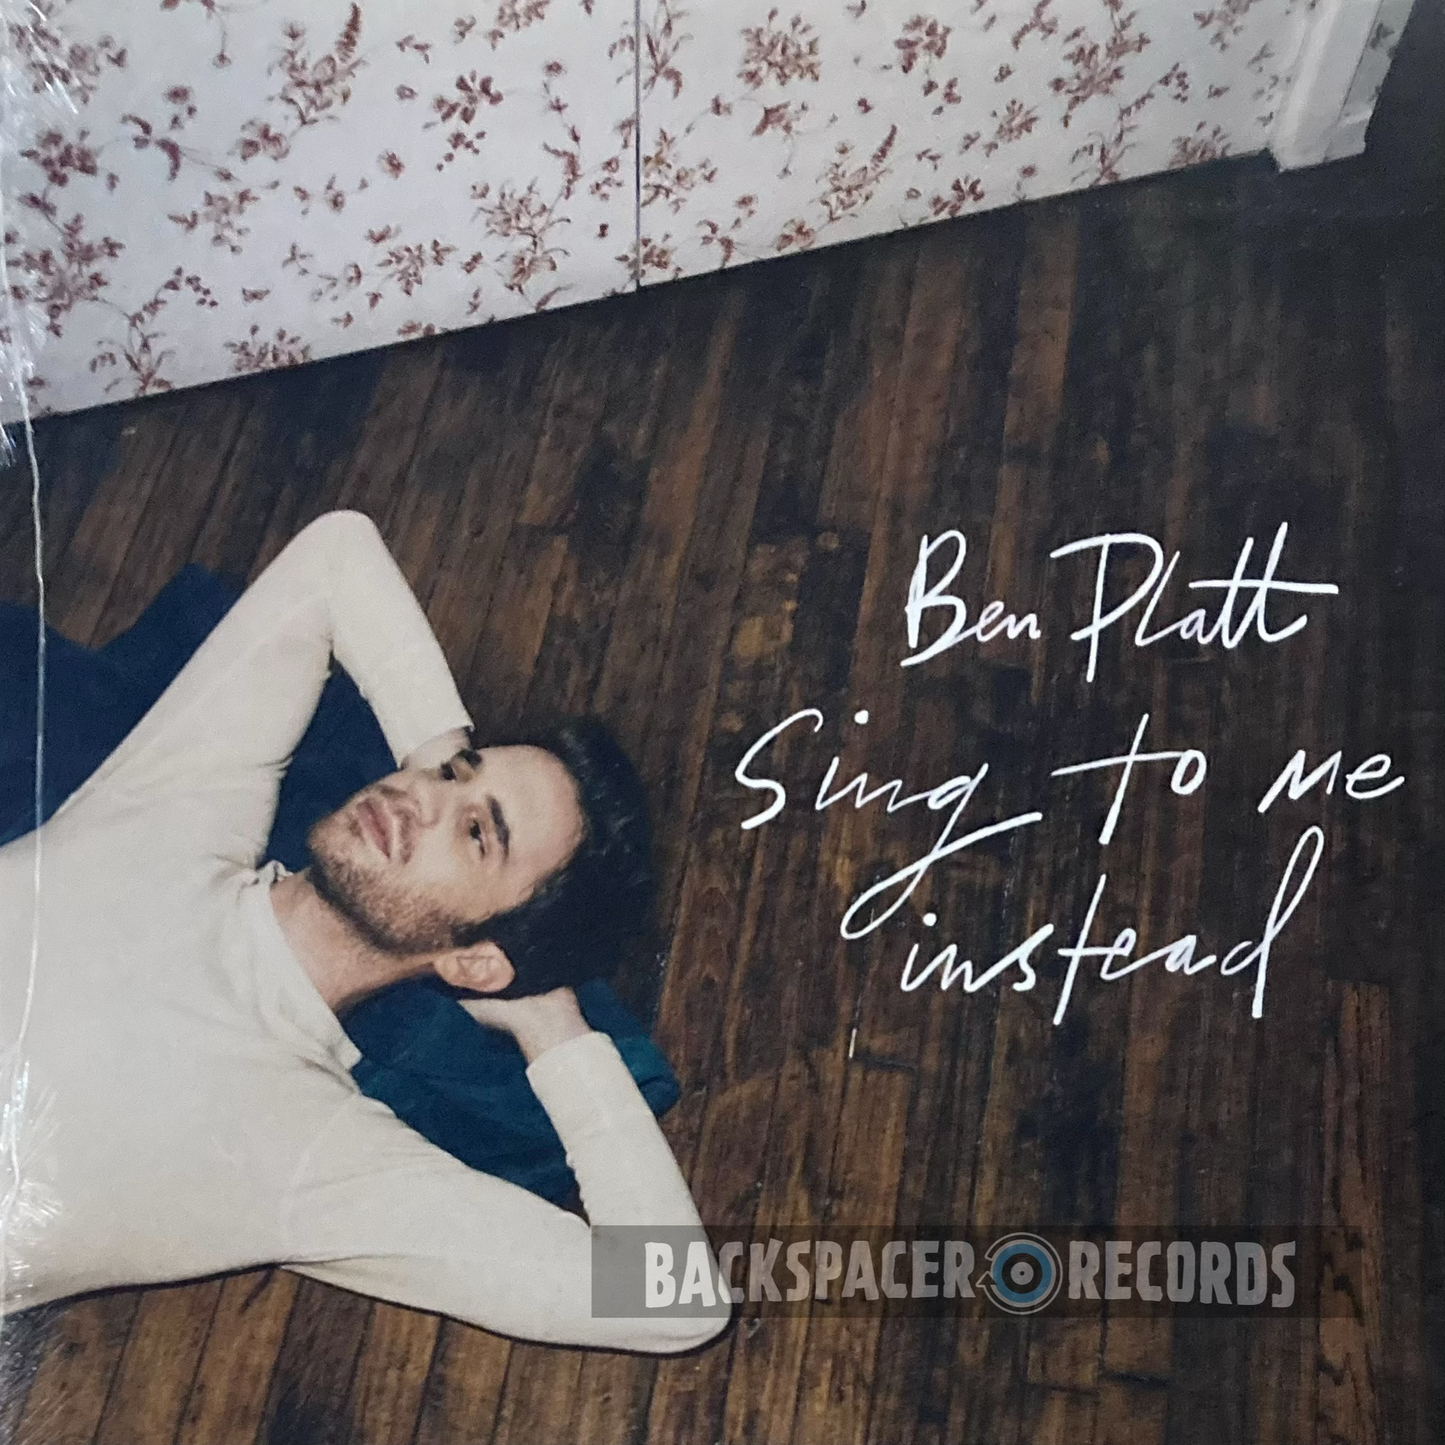 Ben Platt - Sing To Me Instead LP (Sealed)